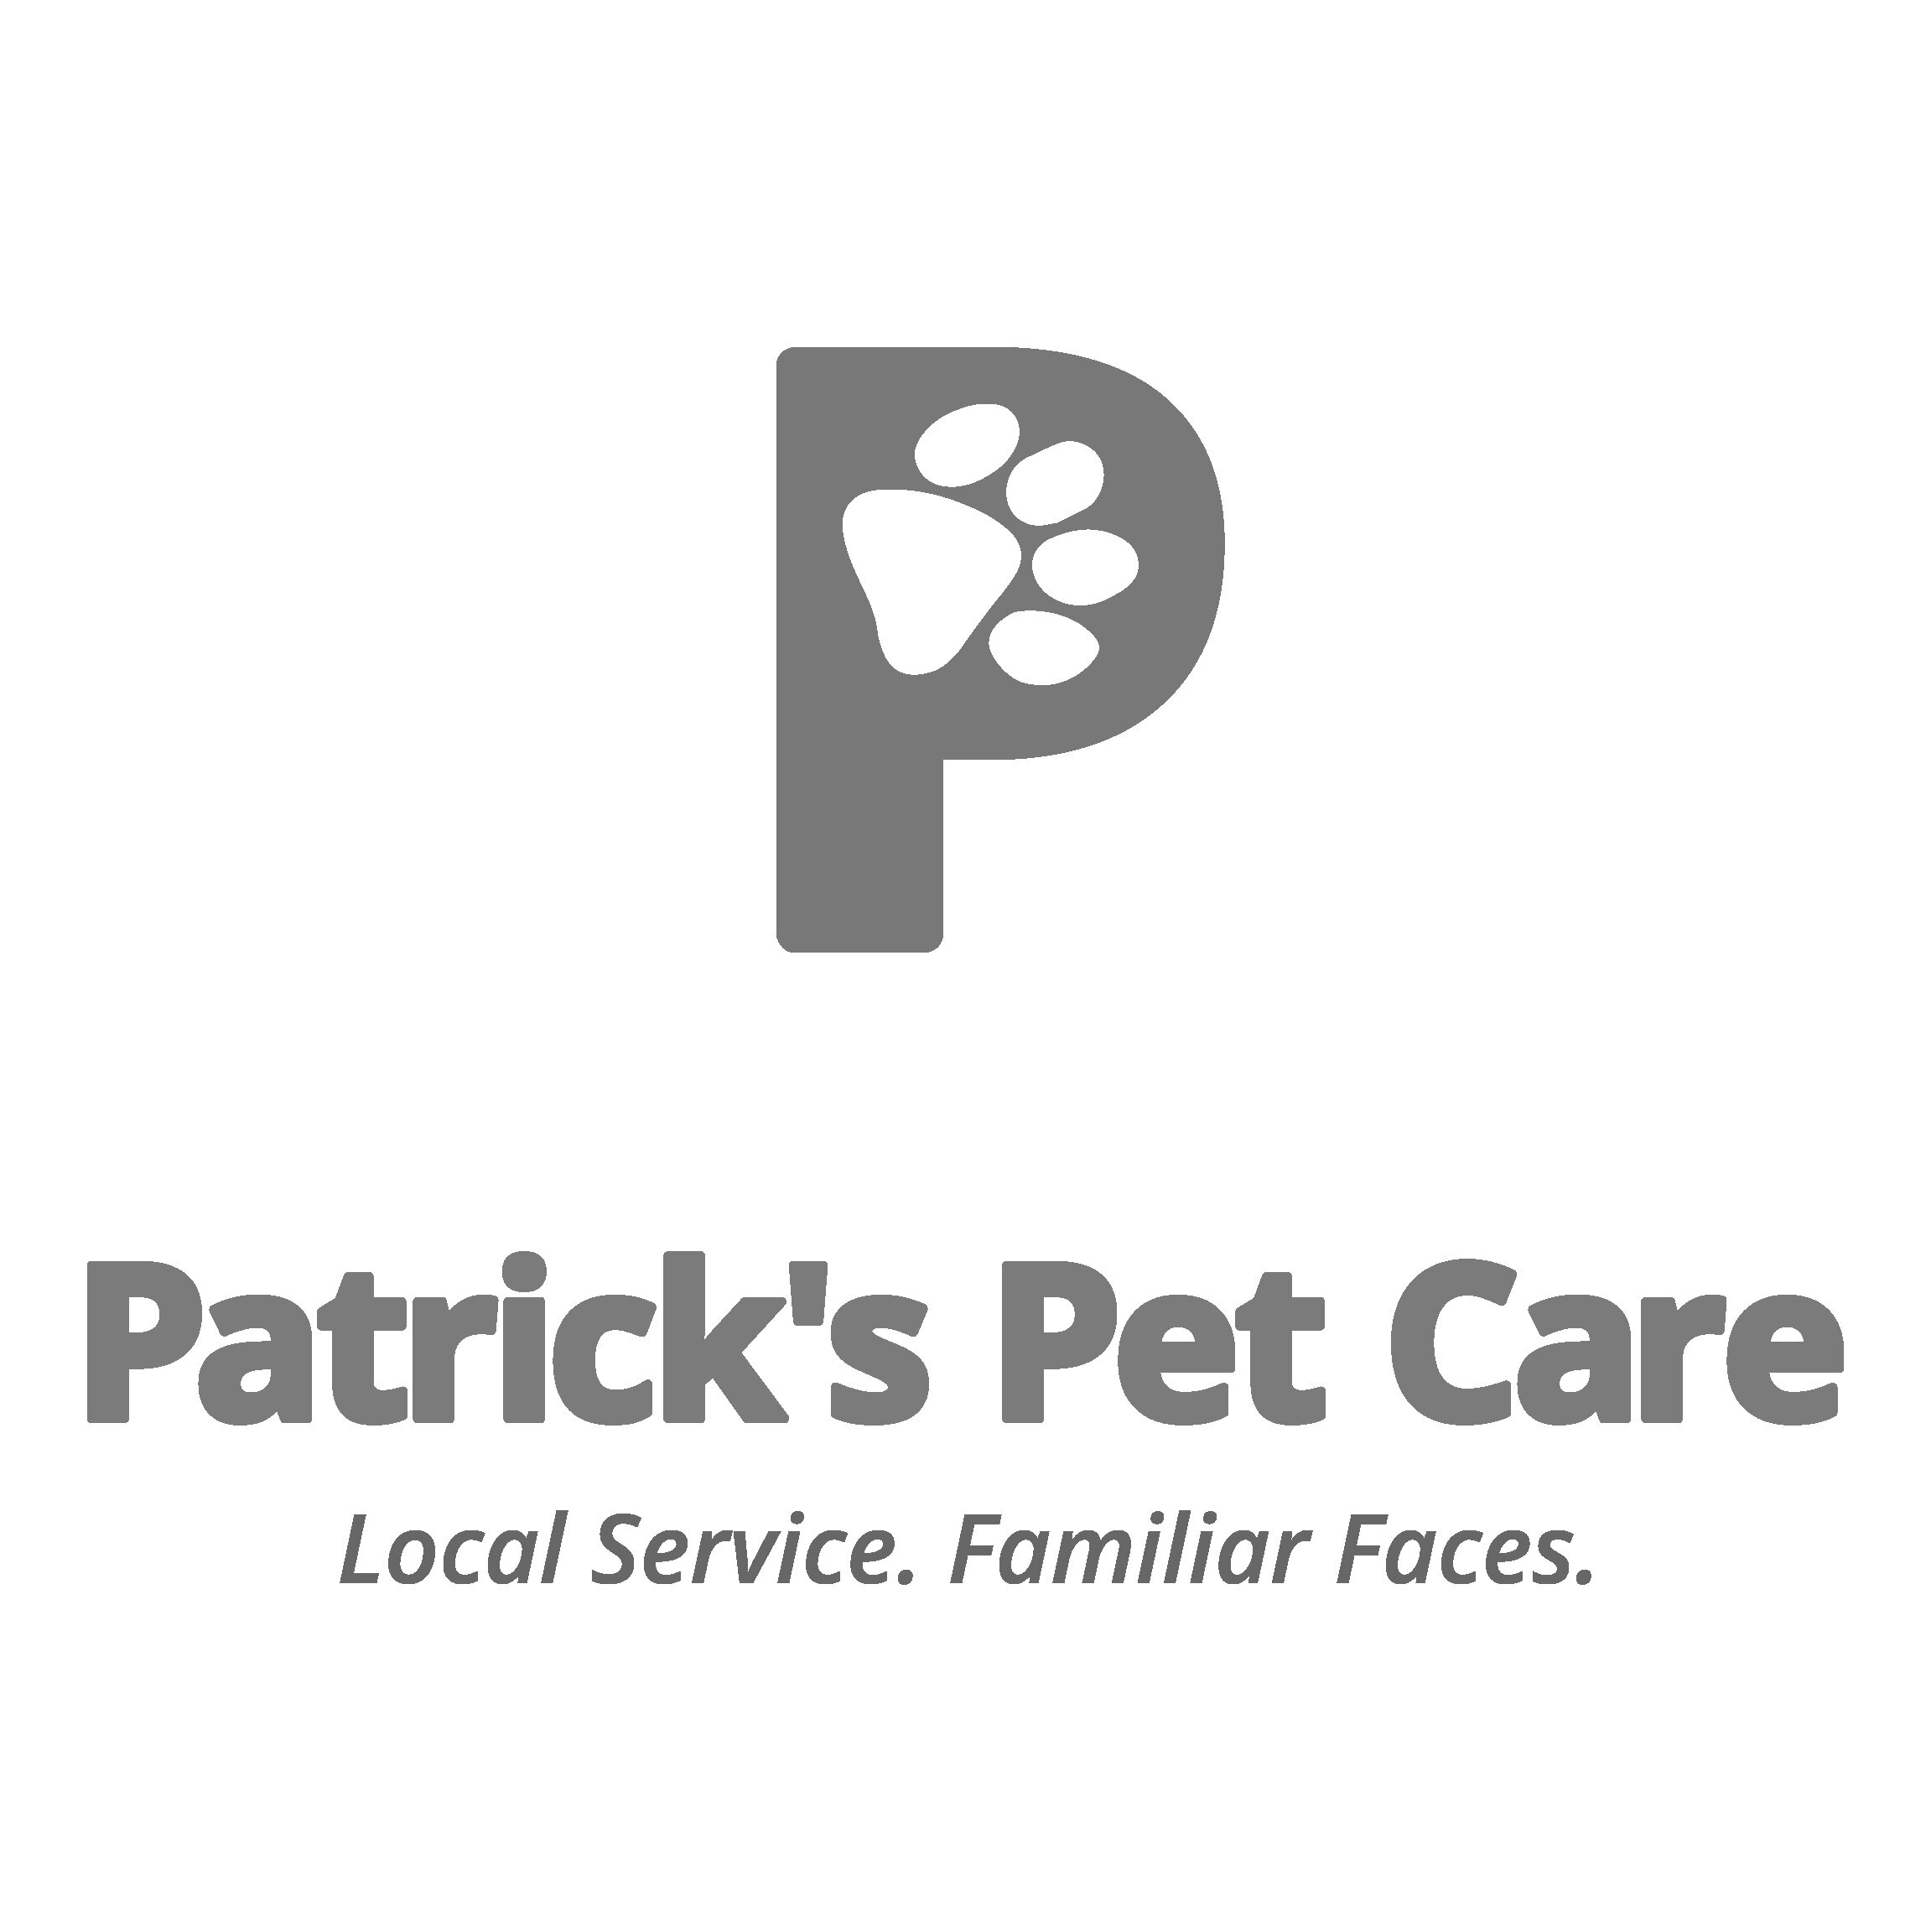 Copy+of+Patricks-Pet-Care+copy.jpg